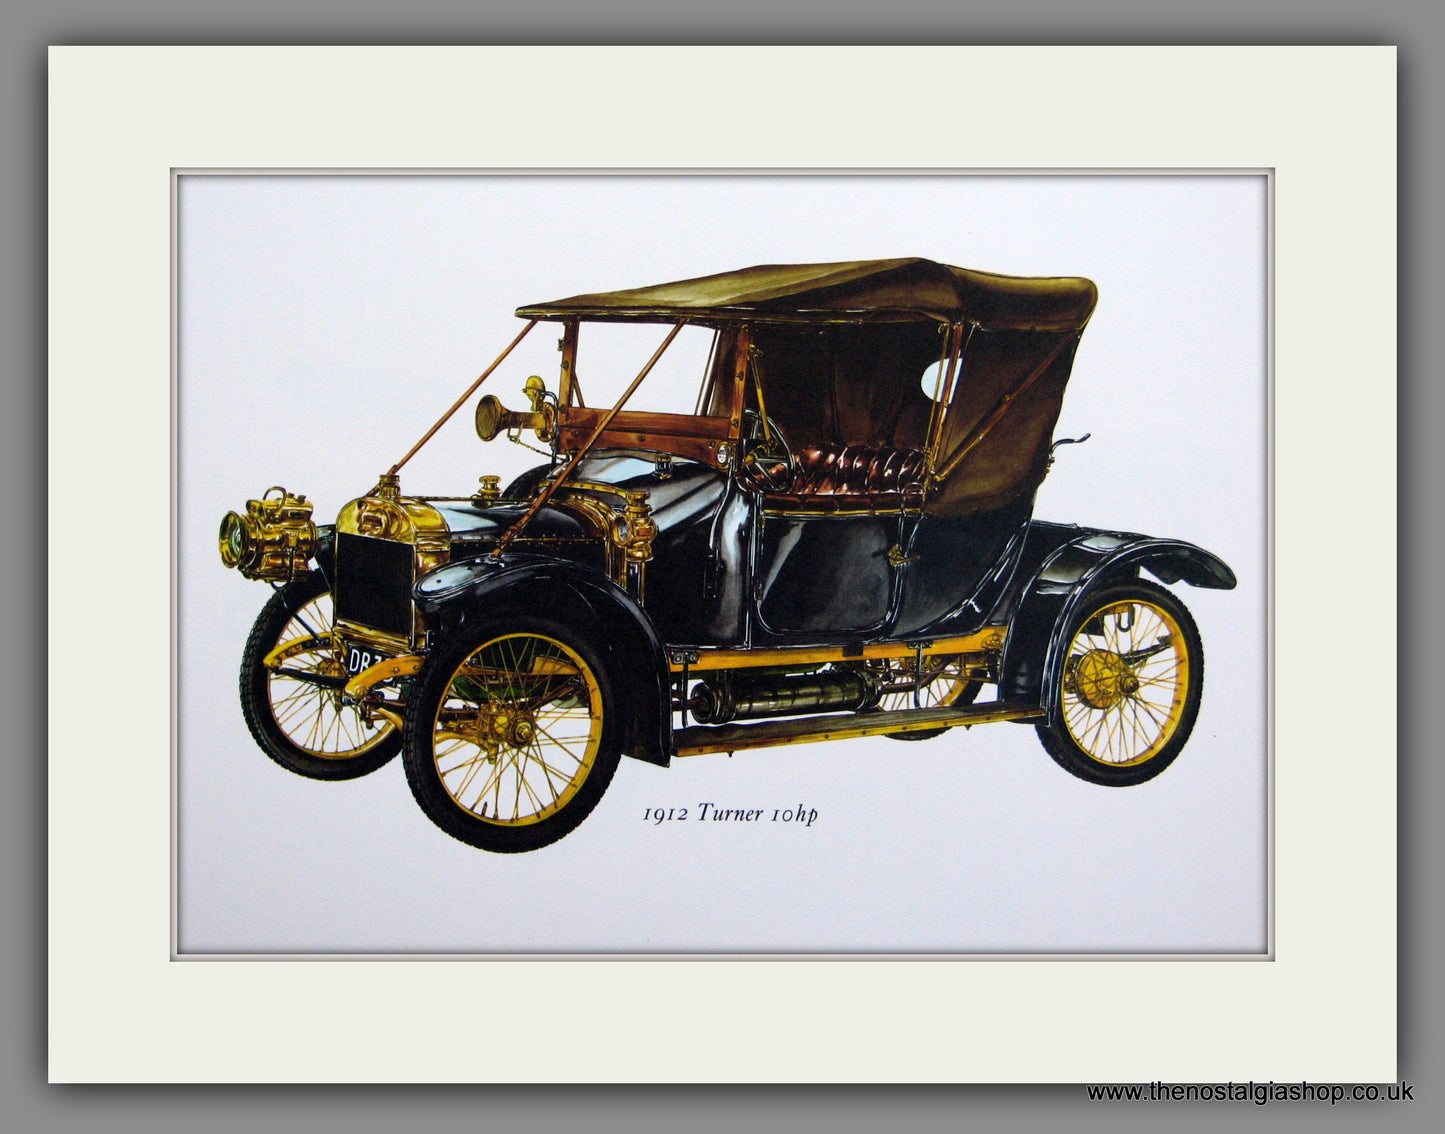 Turner 10hp 1912. Mounted Print.